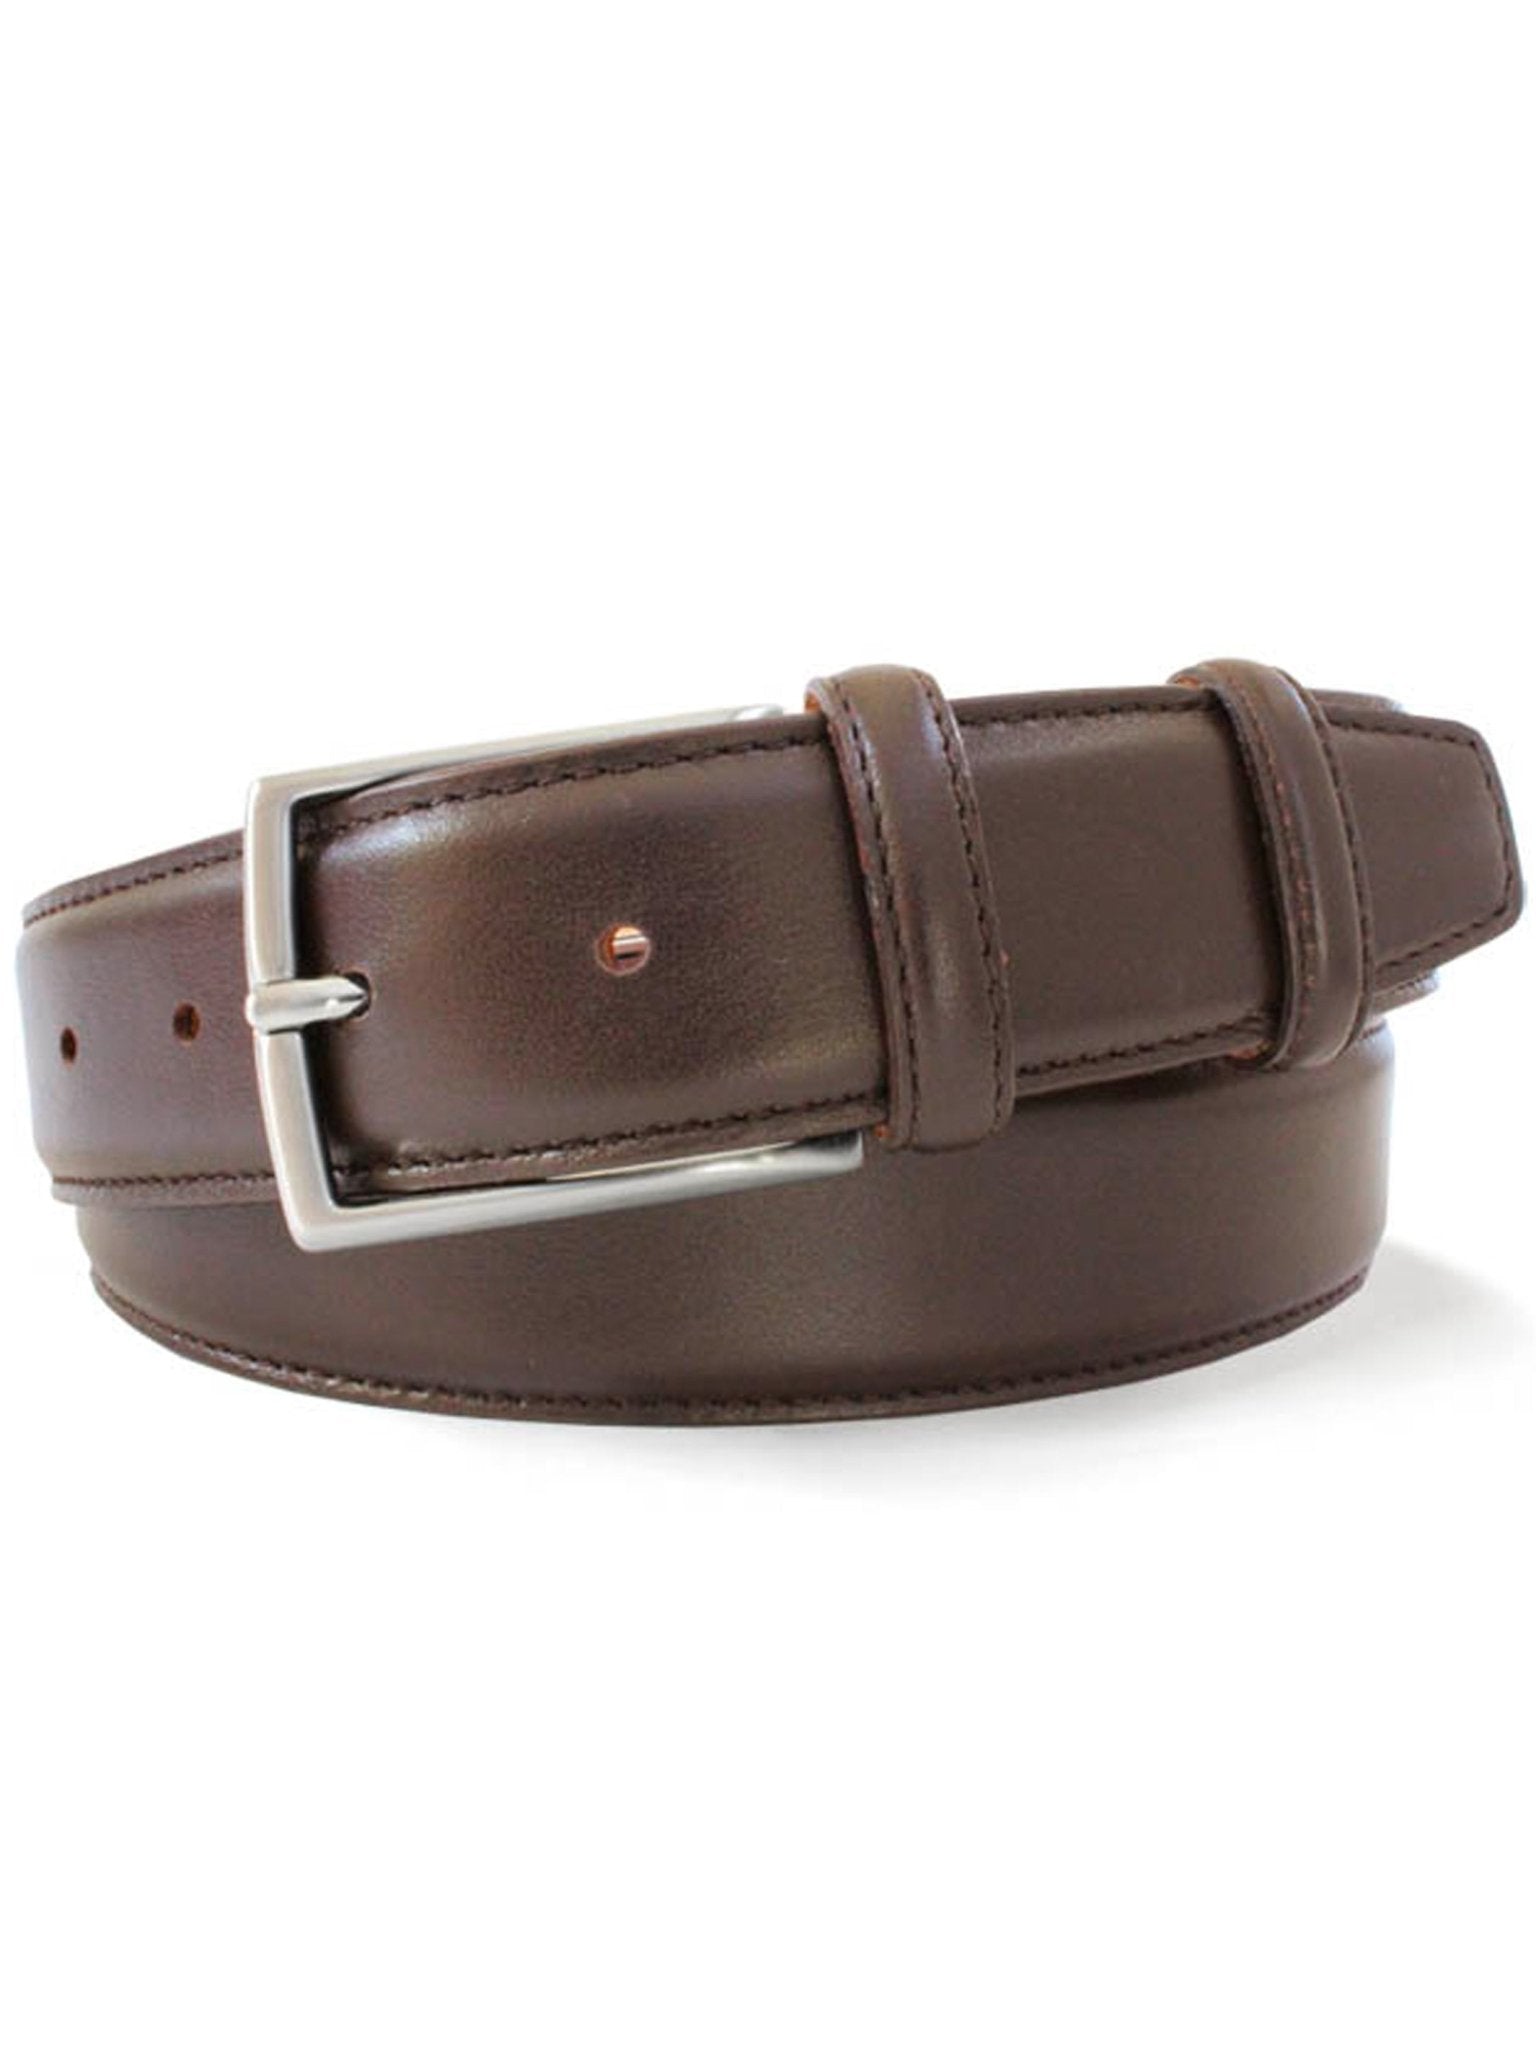 4elementsclothingRobert CharlesRobert Charles Belts - 3751 Calfskin Leather Mens belt - 35mm leather width - Made in ItalyBelts3751/BROWN/S